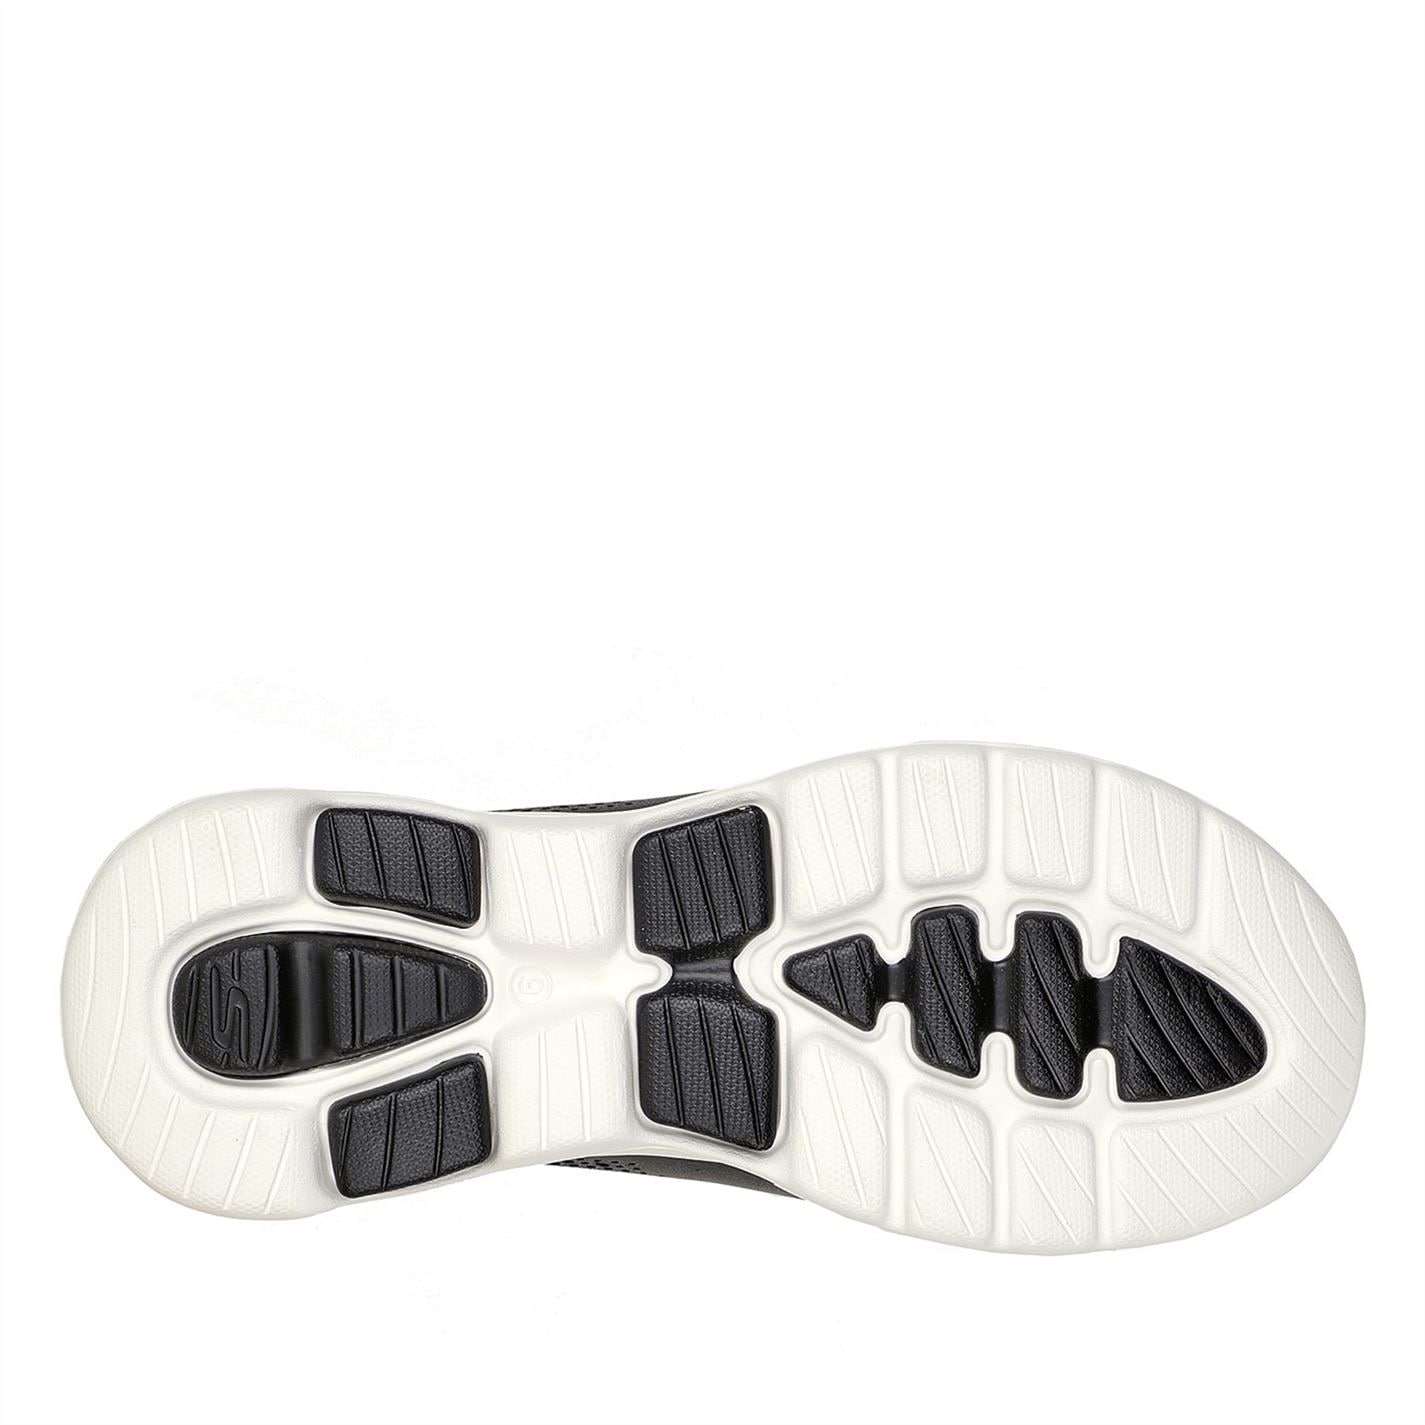 Adidasi Skechers Go Walk Skechers 5 Shoes pentru Barbati negru